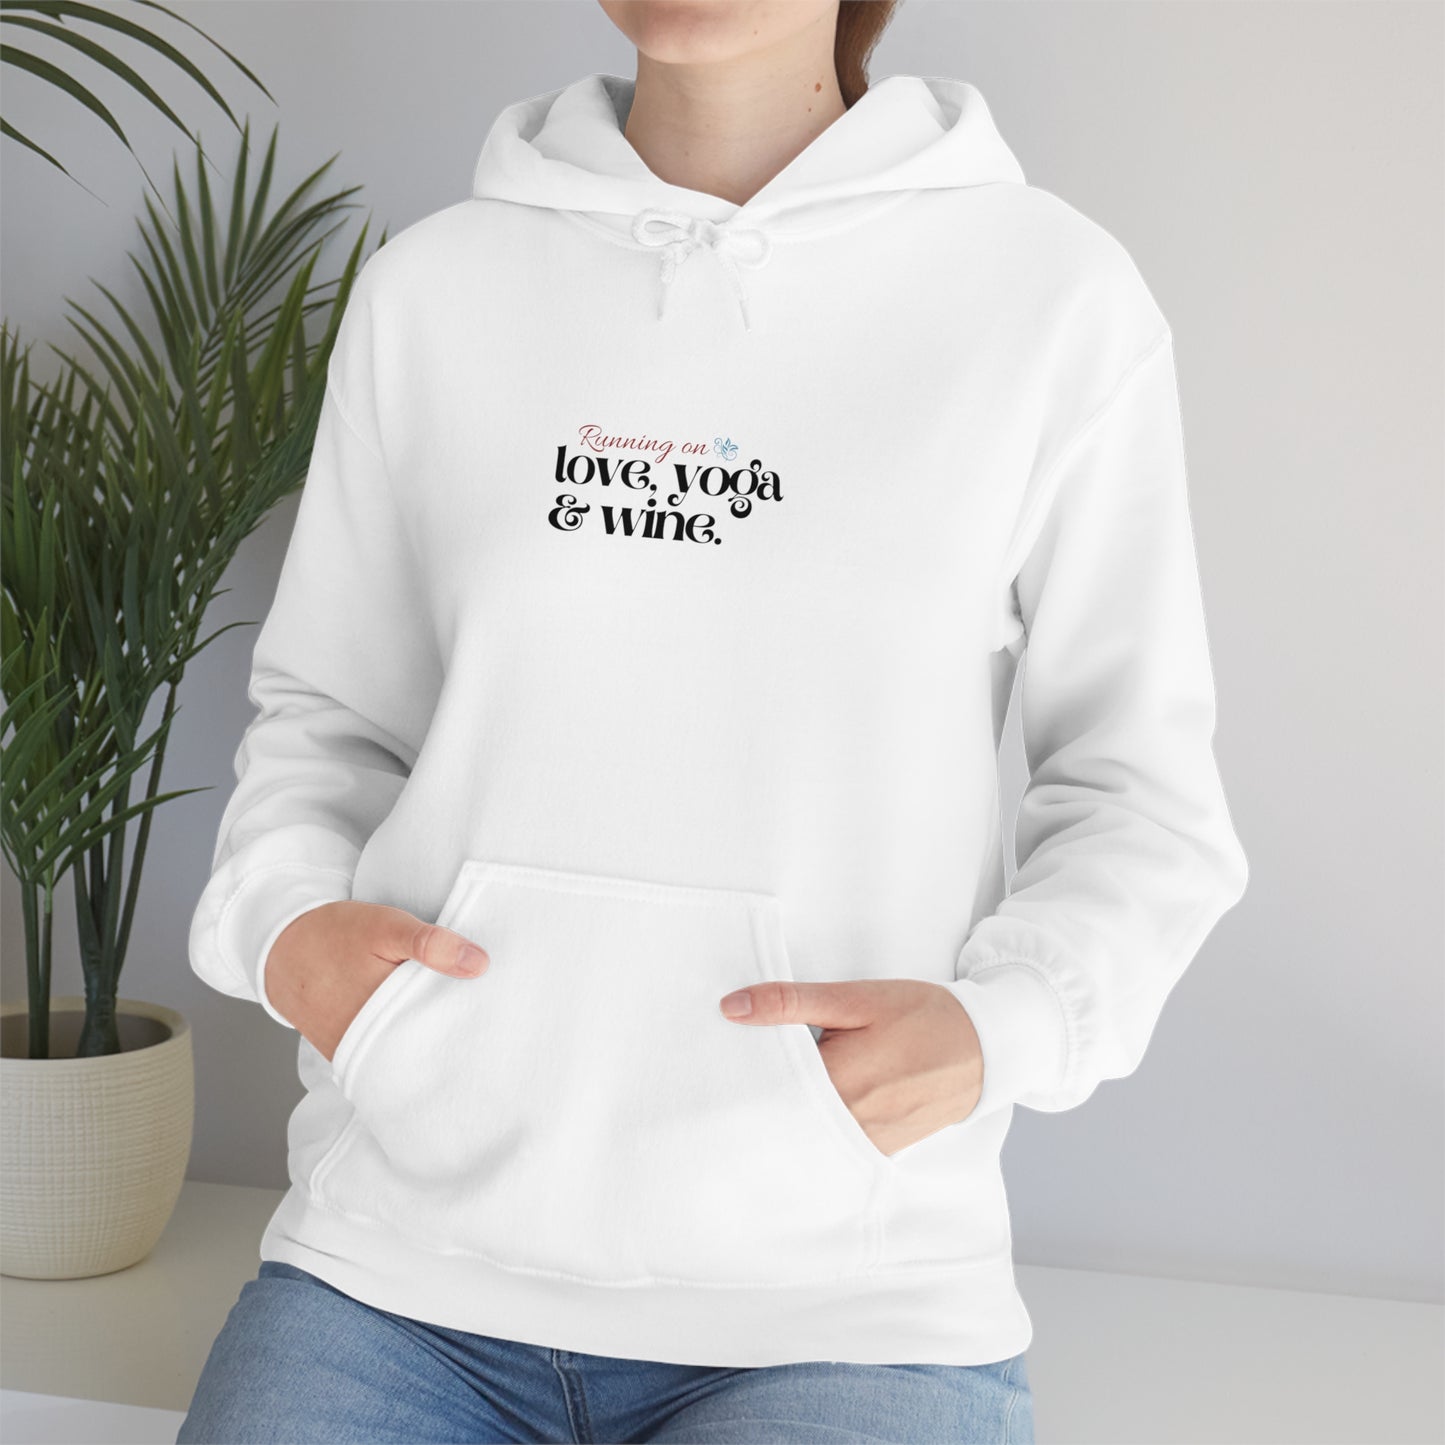 love, yoga & wine - Hooded Sweatshirt